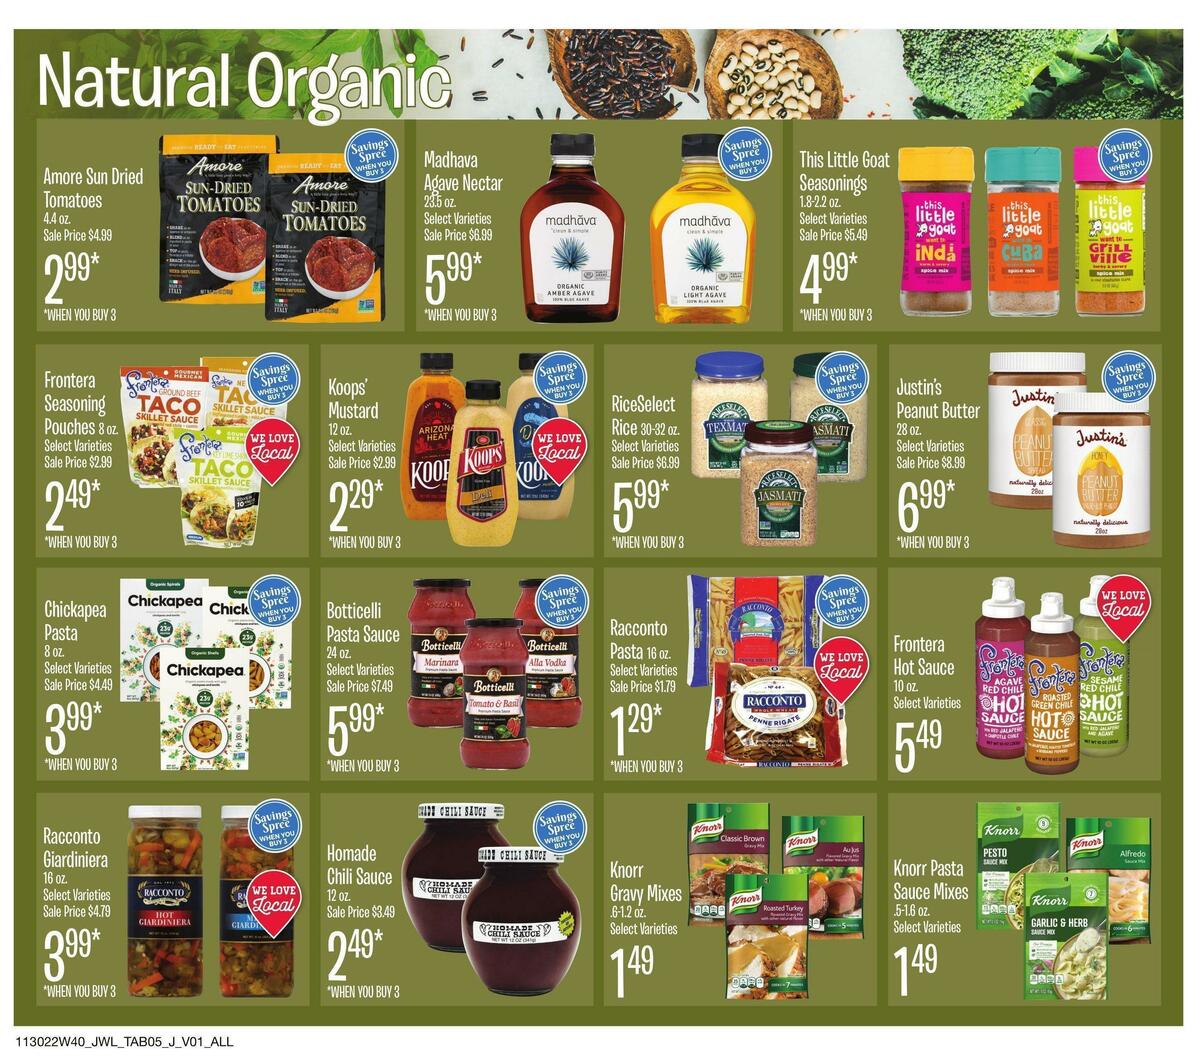 Jewel Osco Natural & Organic Weekly Ad from November 30